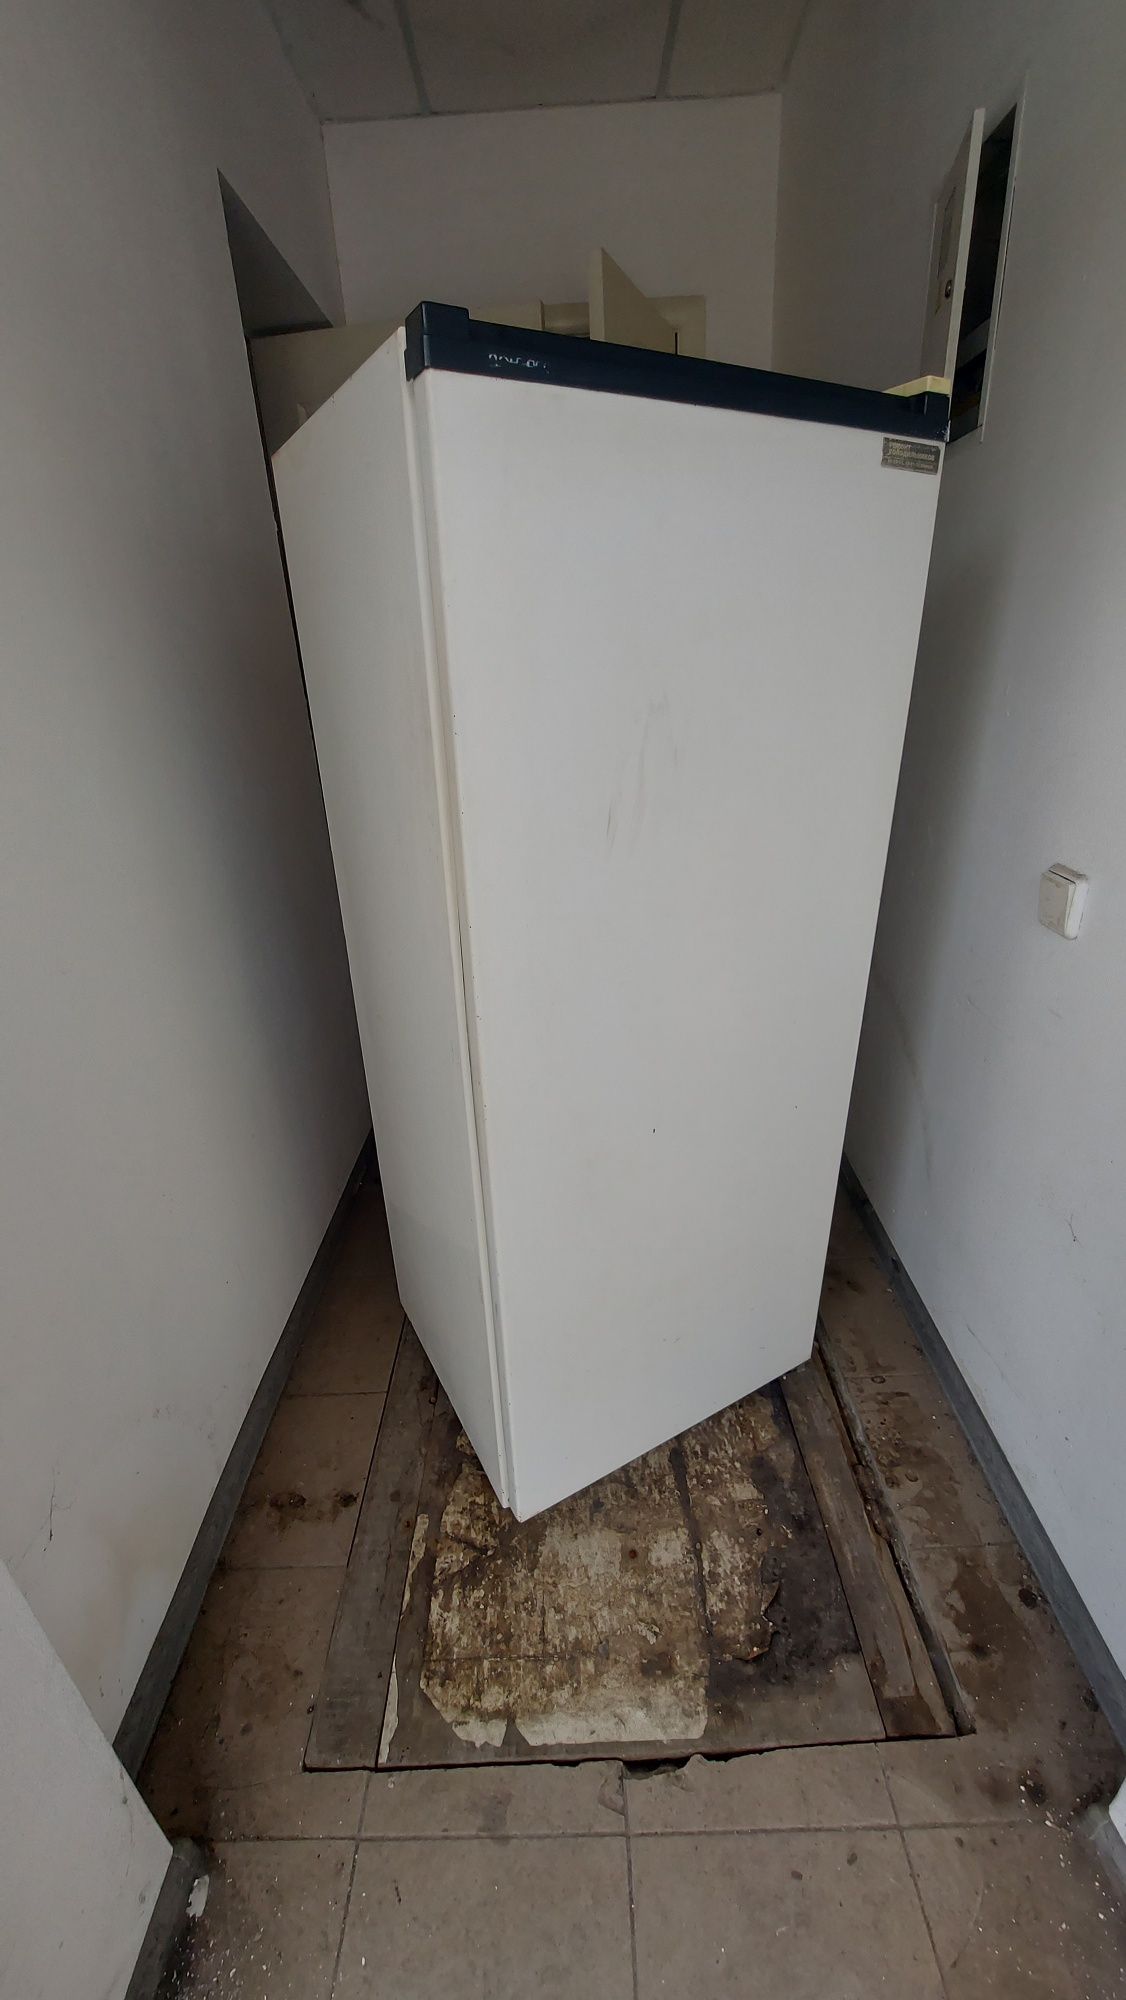 Холодильник Донбас